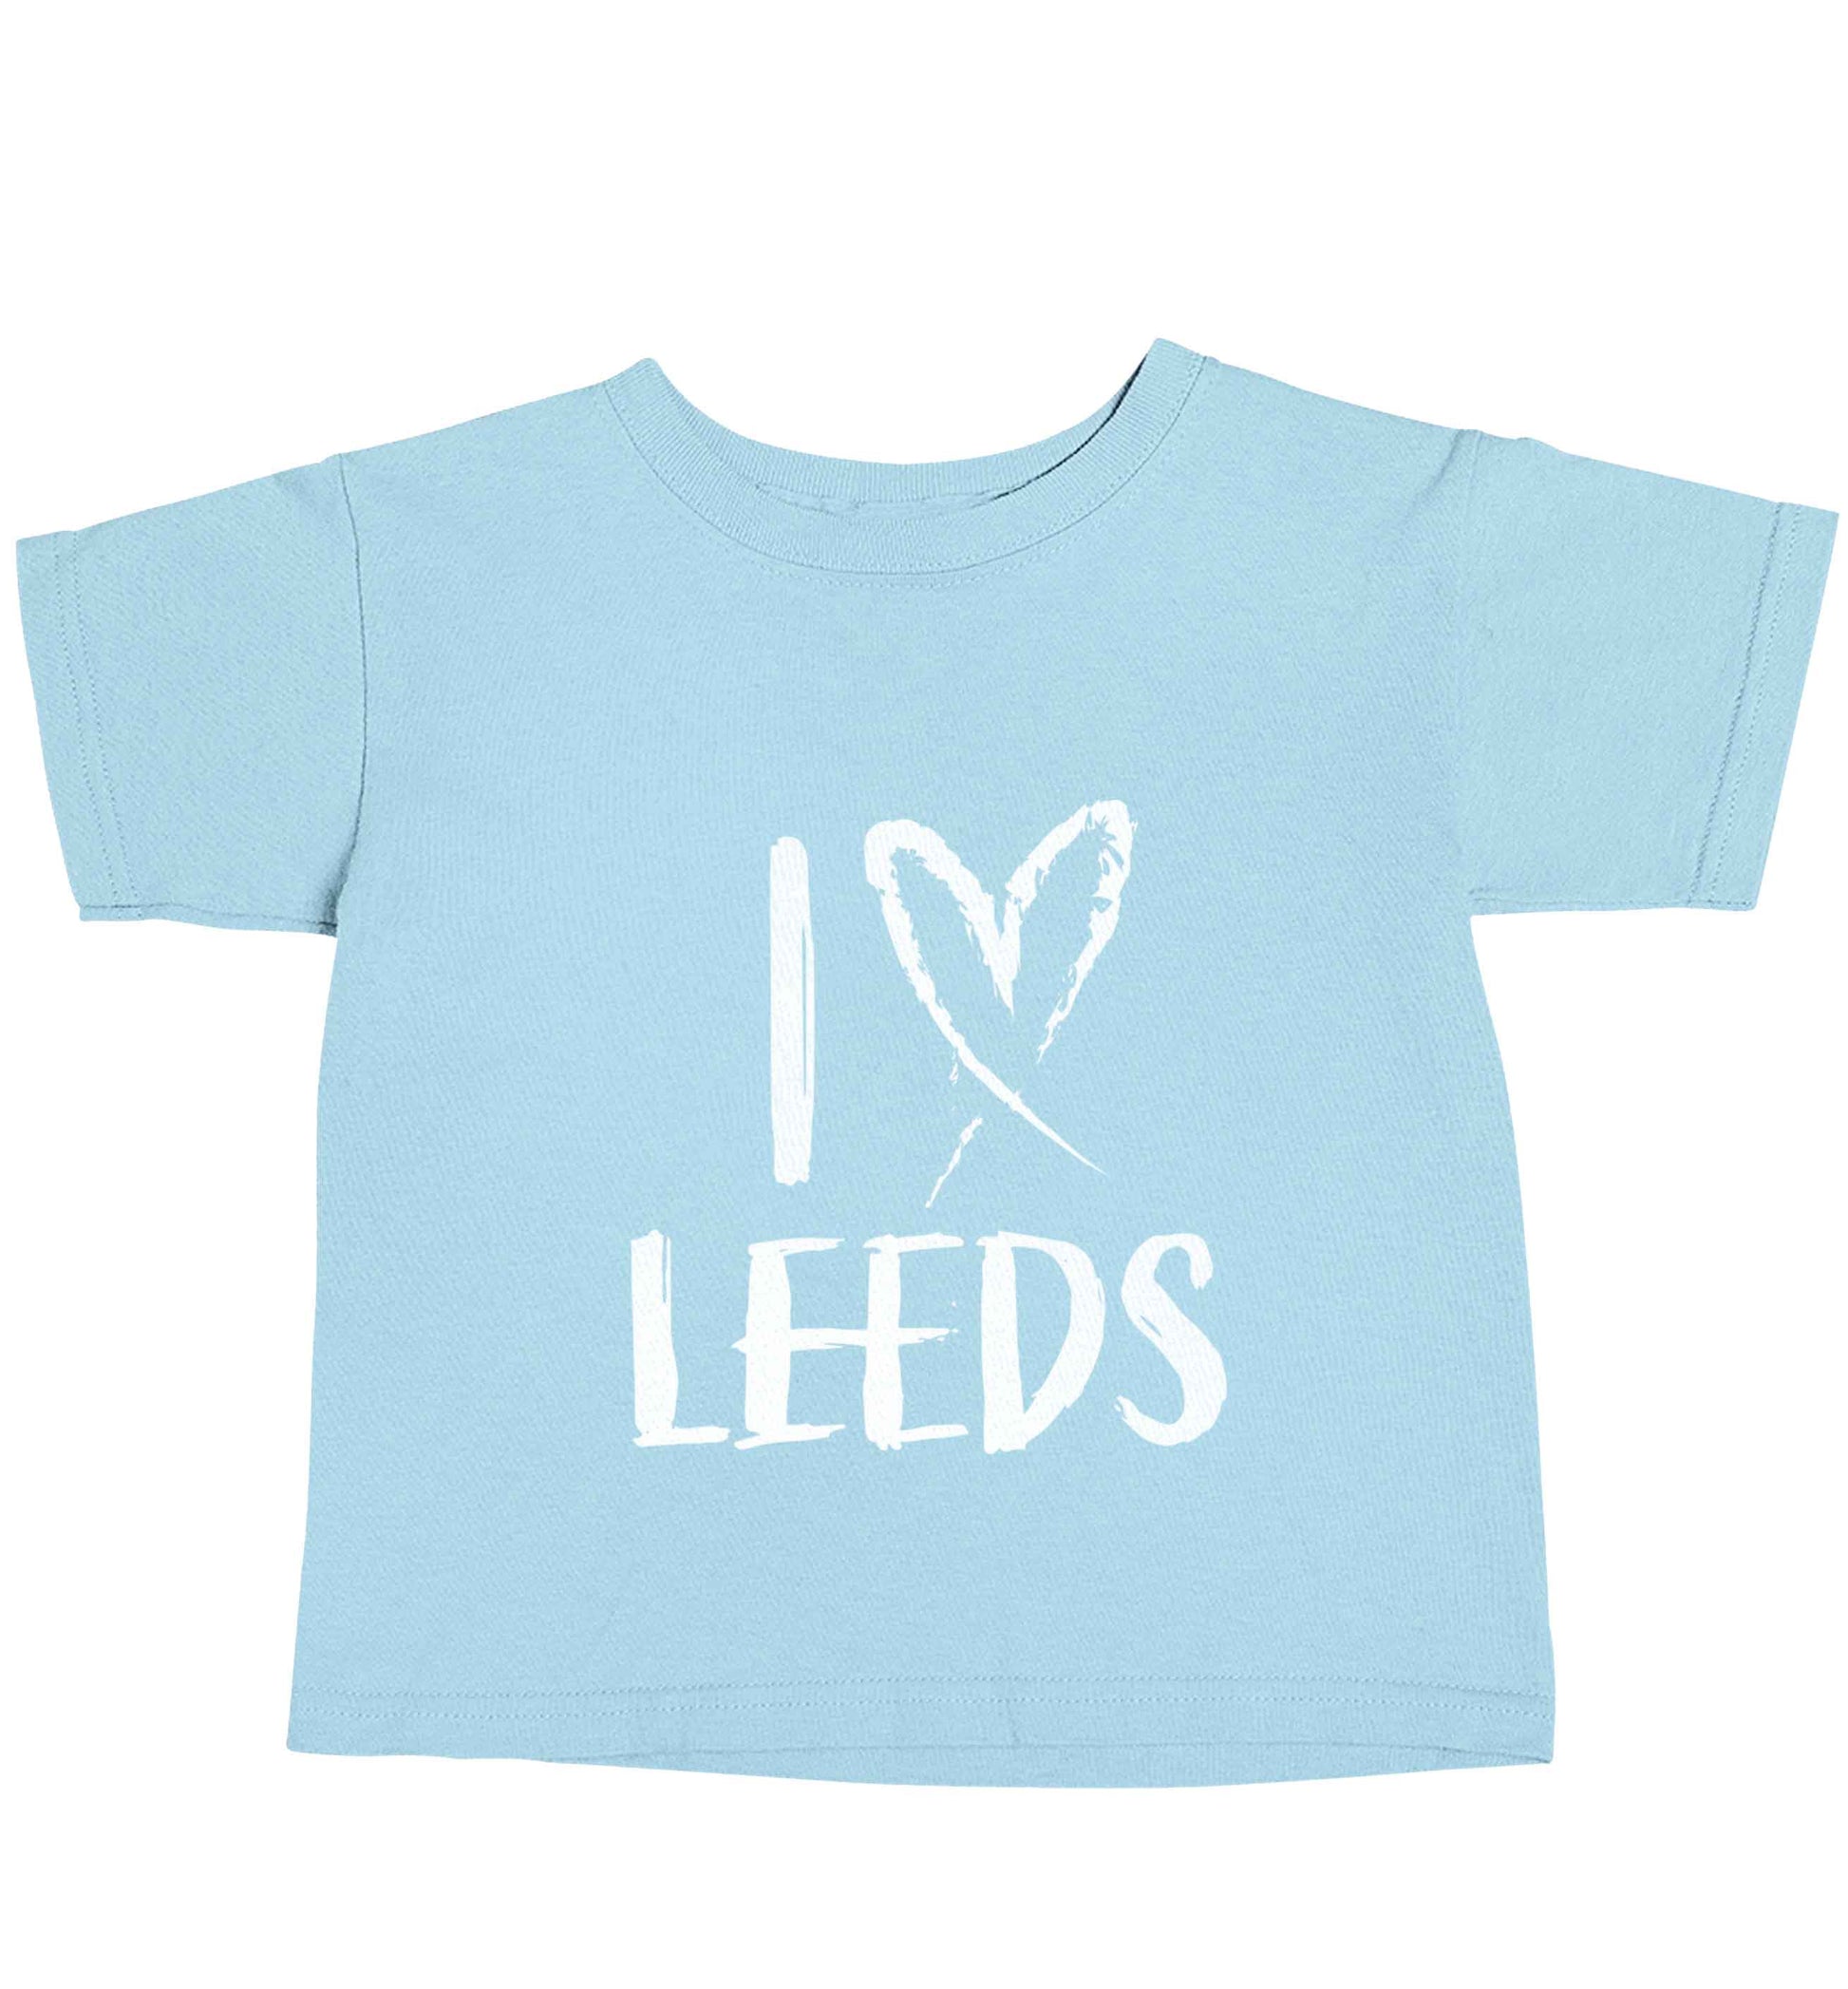 I love Leeds light blue baby toddler Tshirt 2 Years